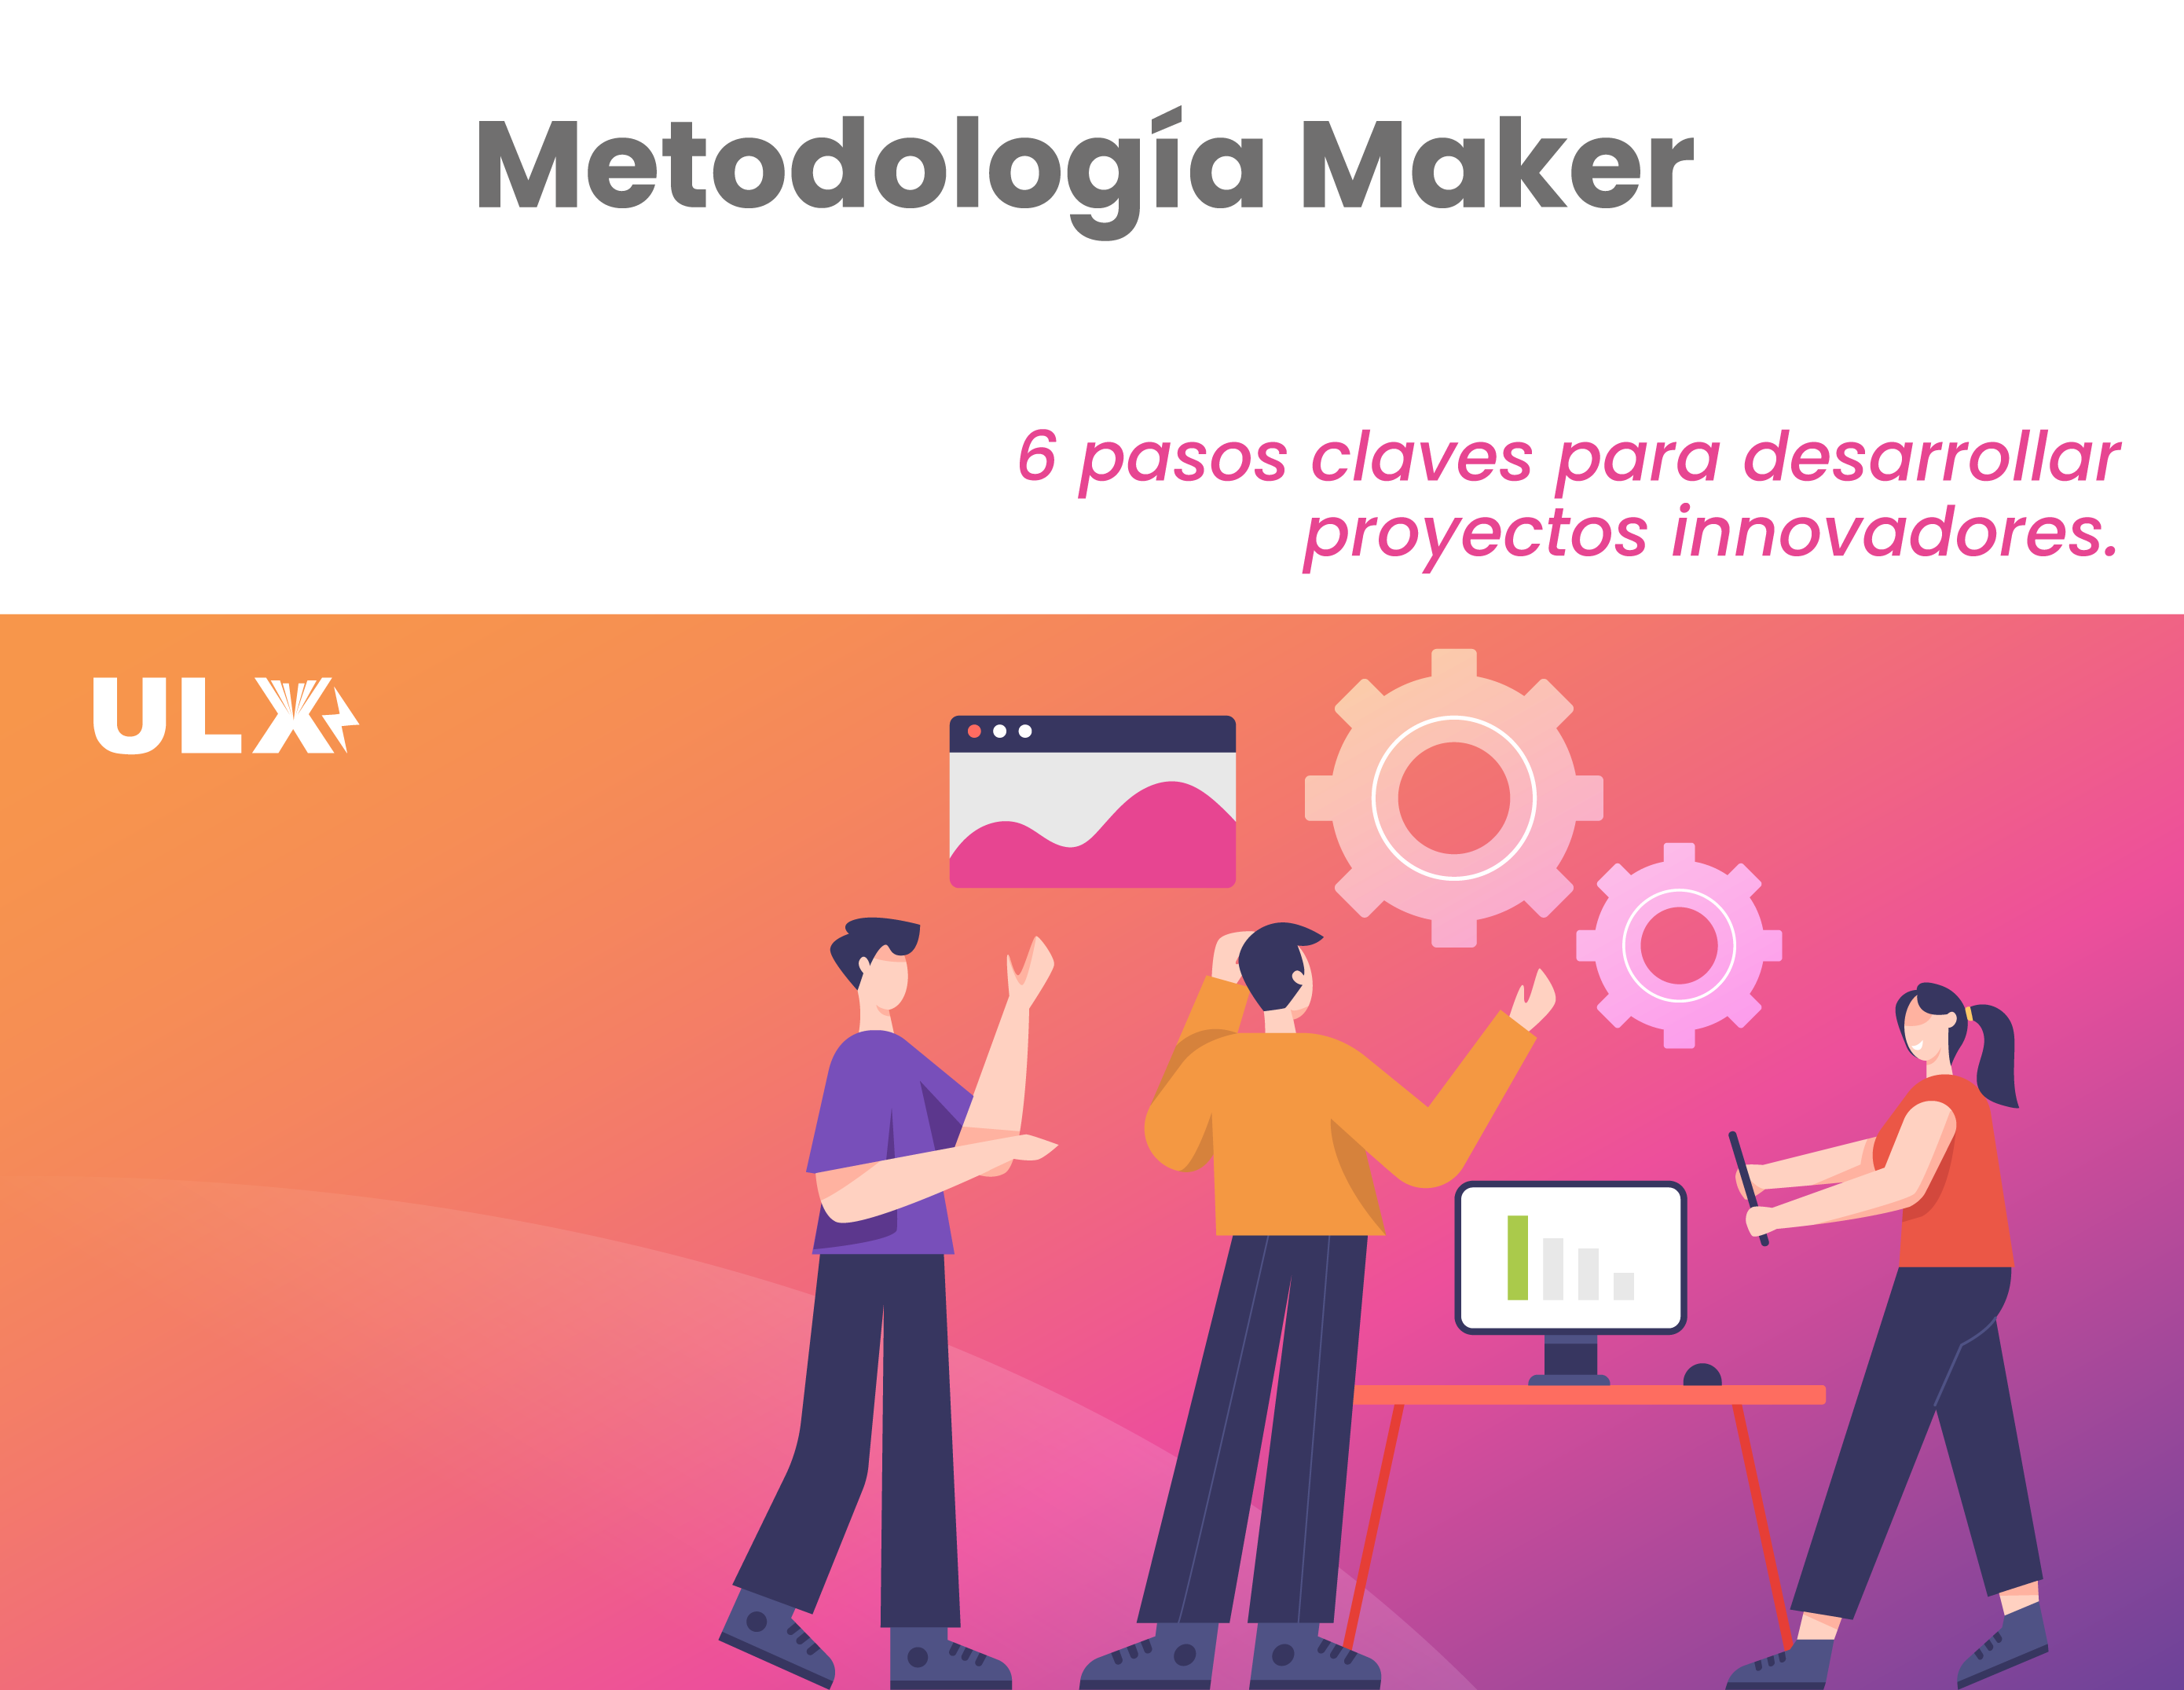 ULX agile - Metodología maker